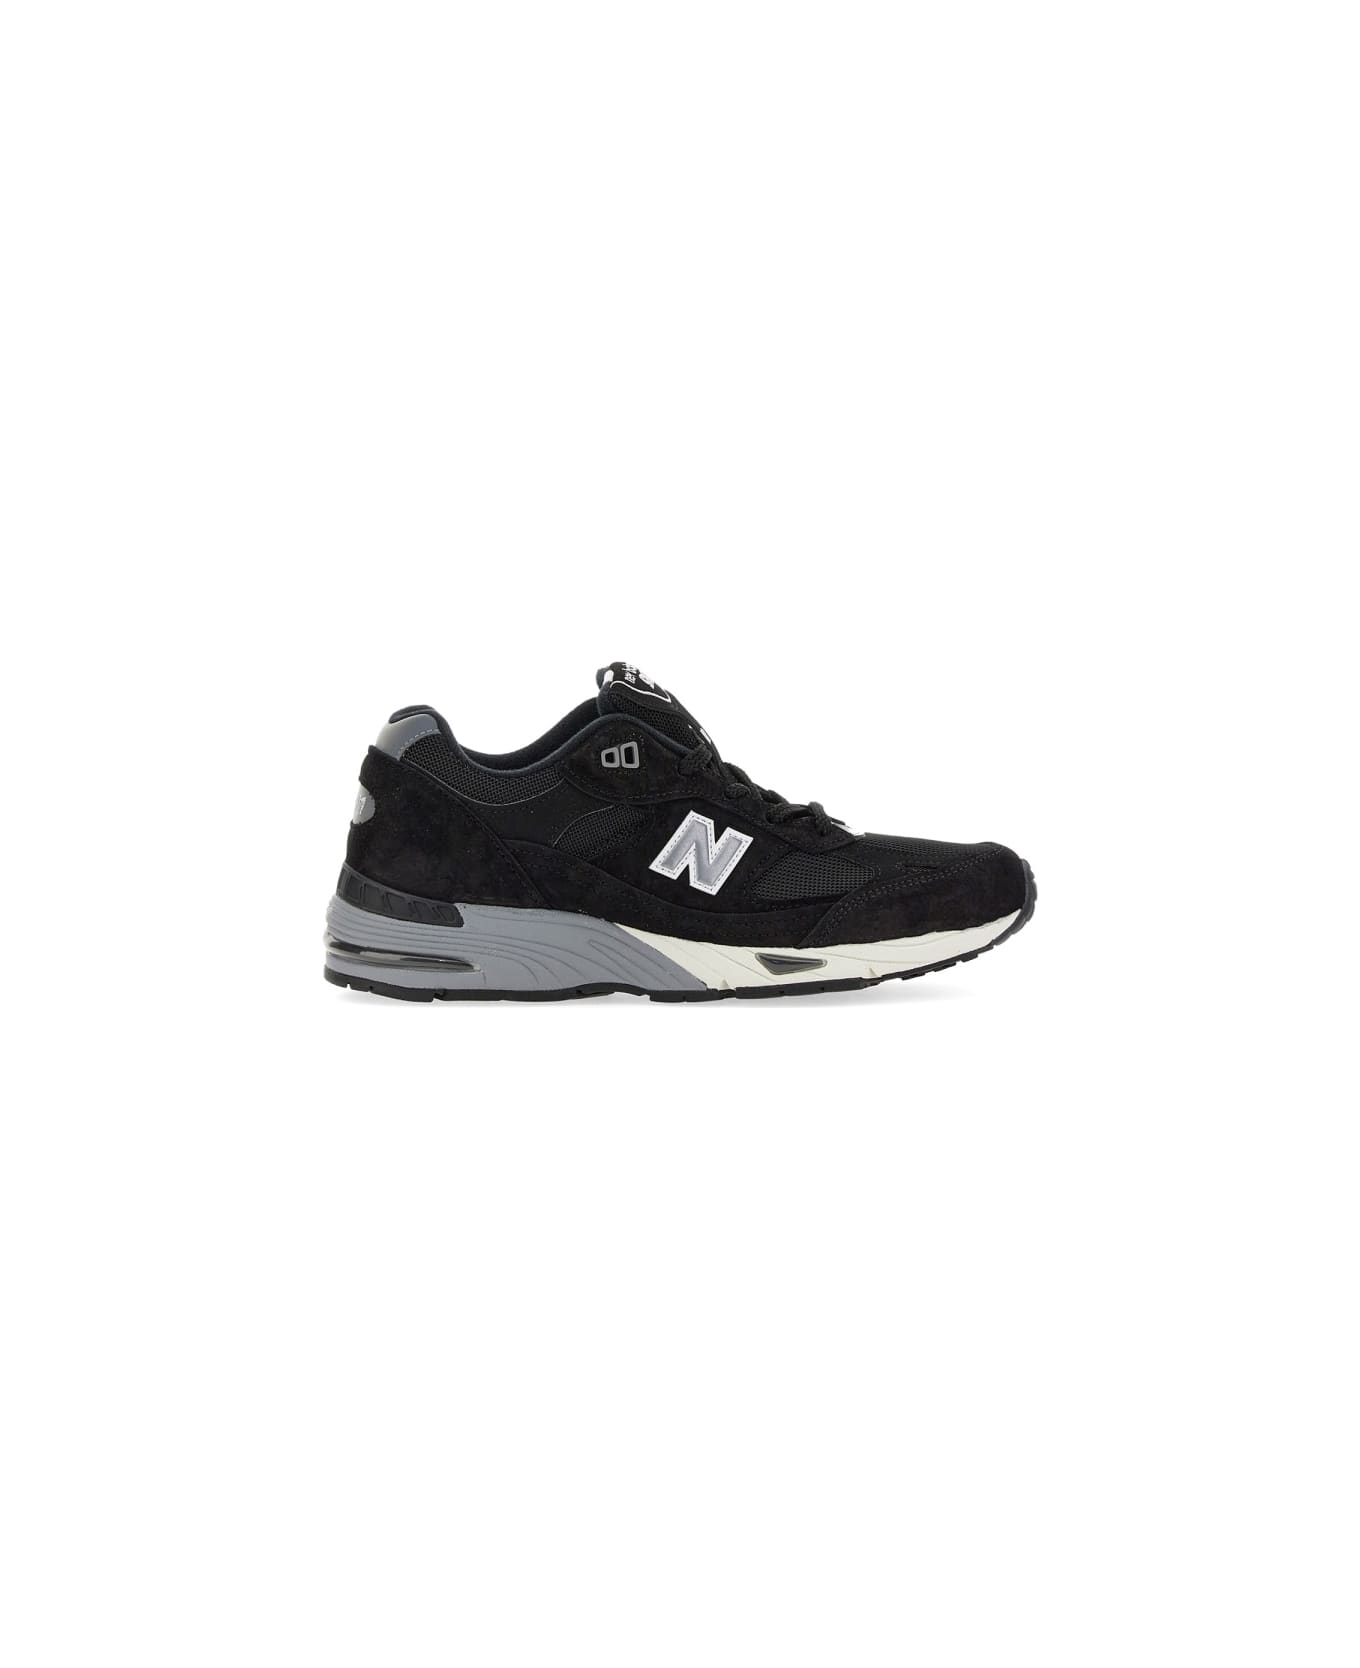 New Balance Sneaker "991" - BLACK